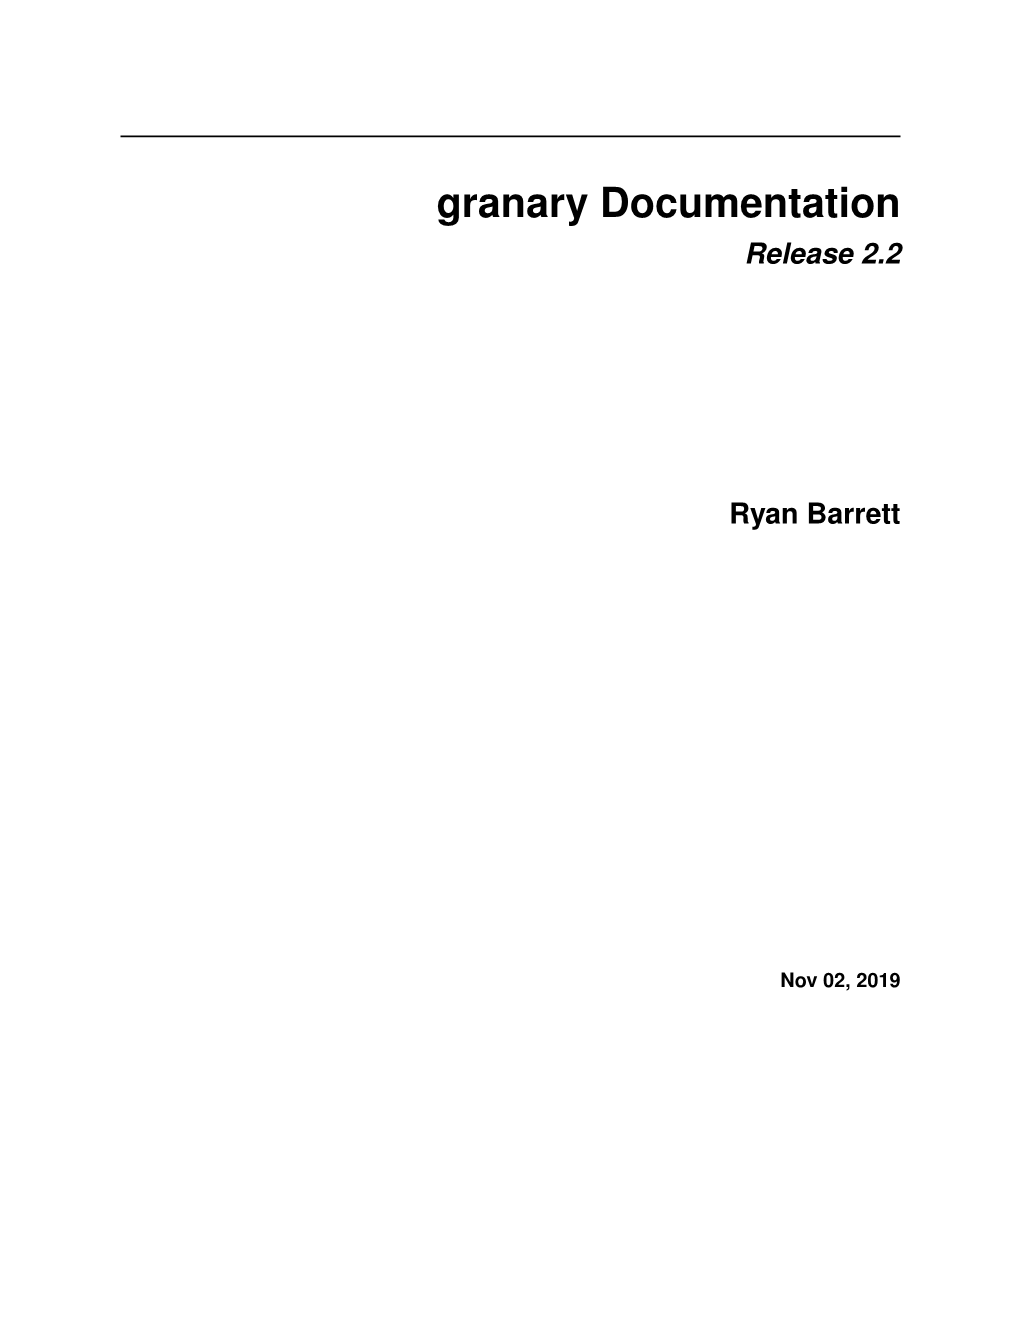 Granary Documentation Release 2.2